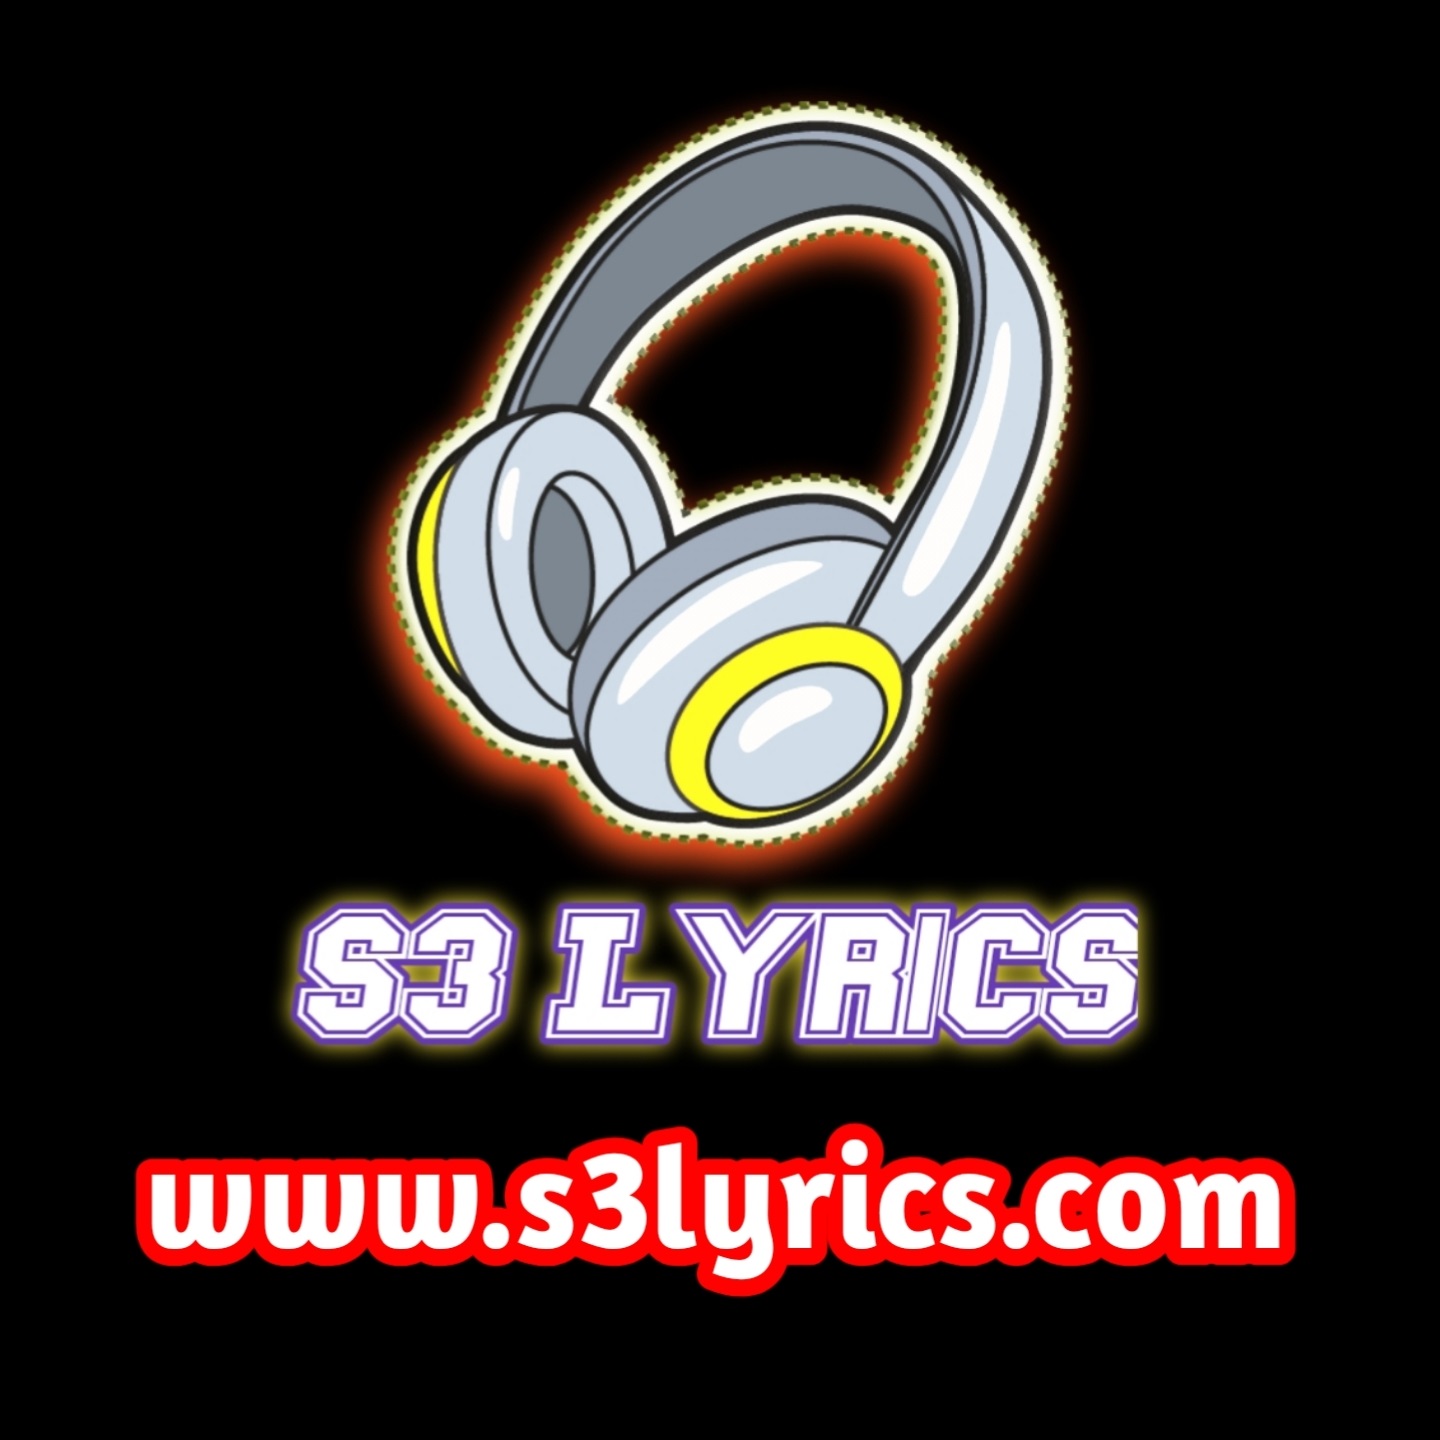 S3 Lyrics : Your Own Must Loved Lyrics WebSite